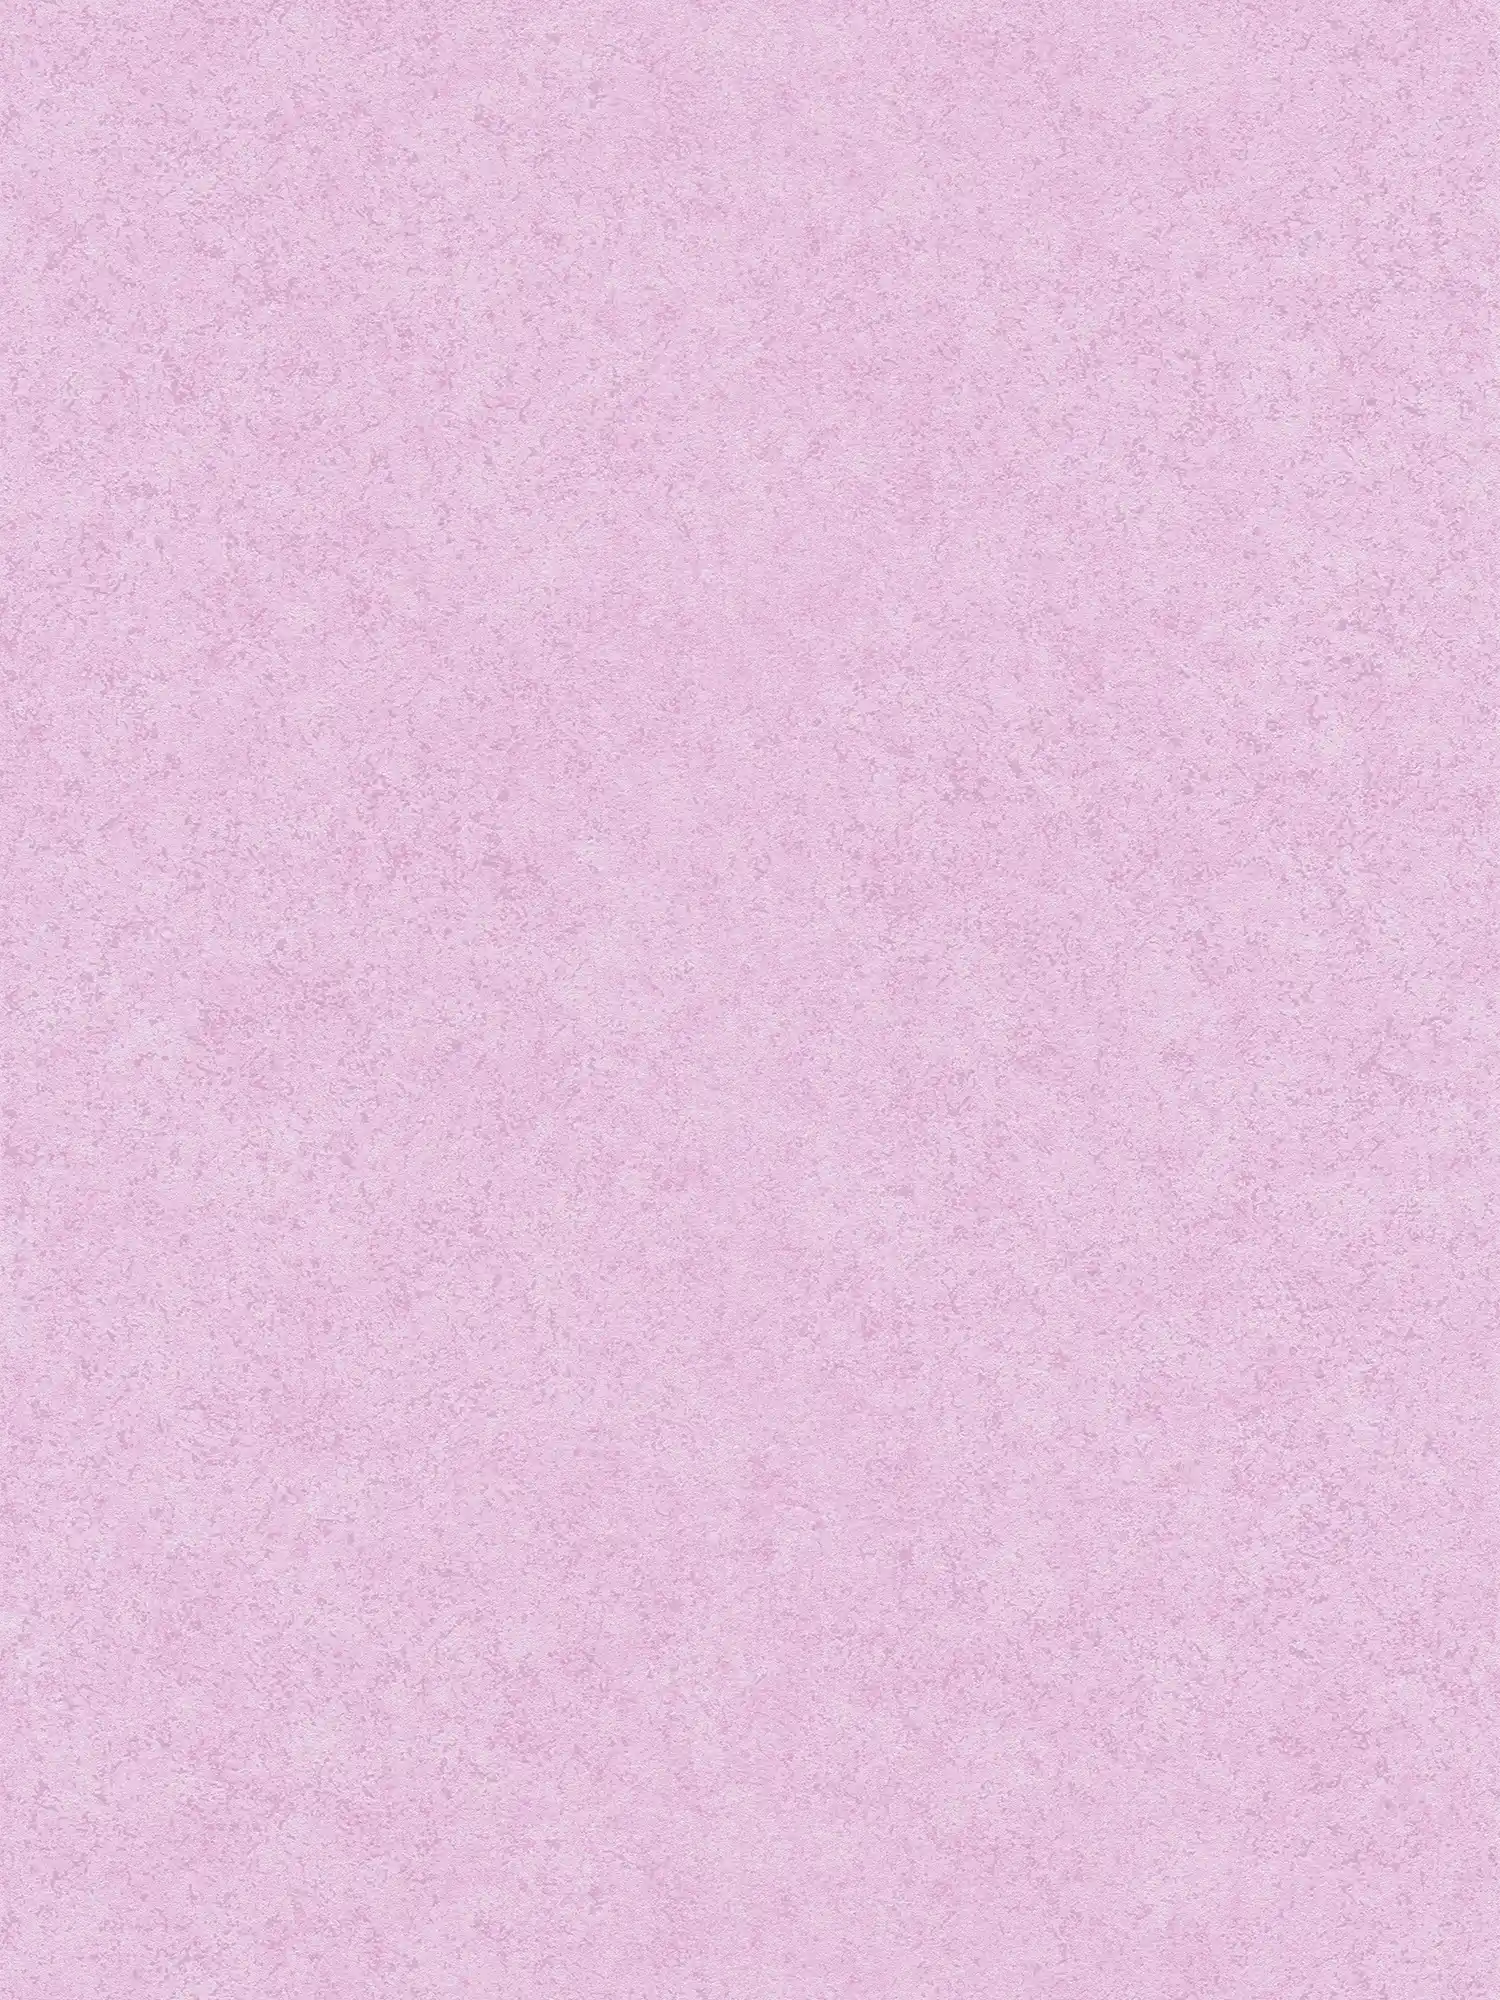 Papel pintado no tejido con aspecto de escayola rosa con dibujo mate - rosa
